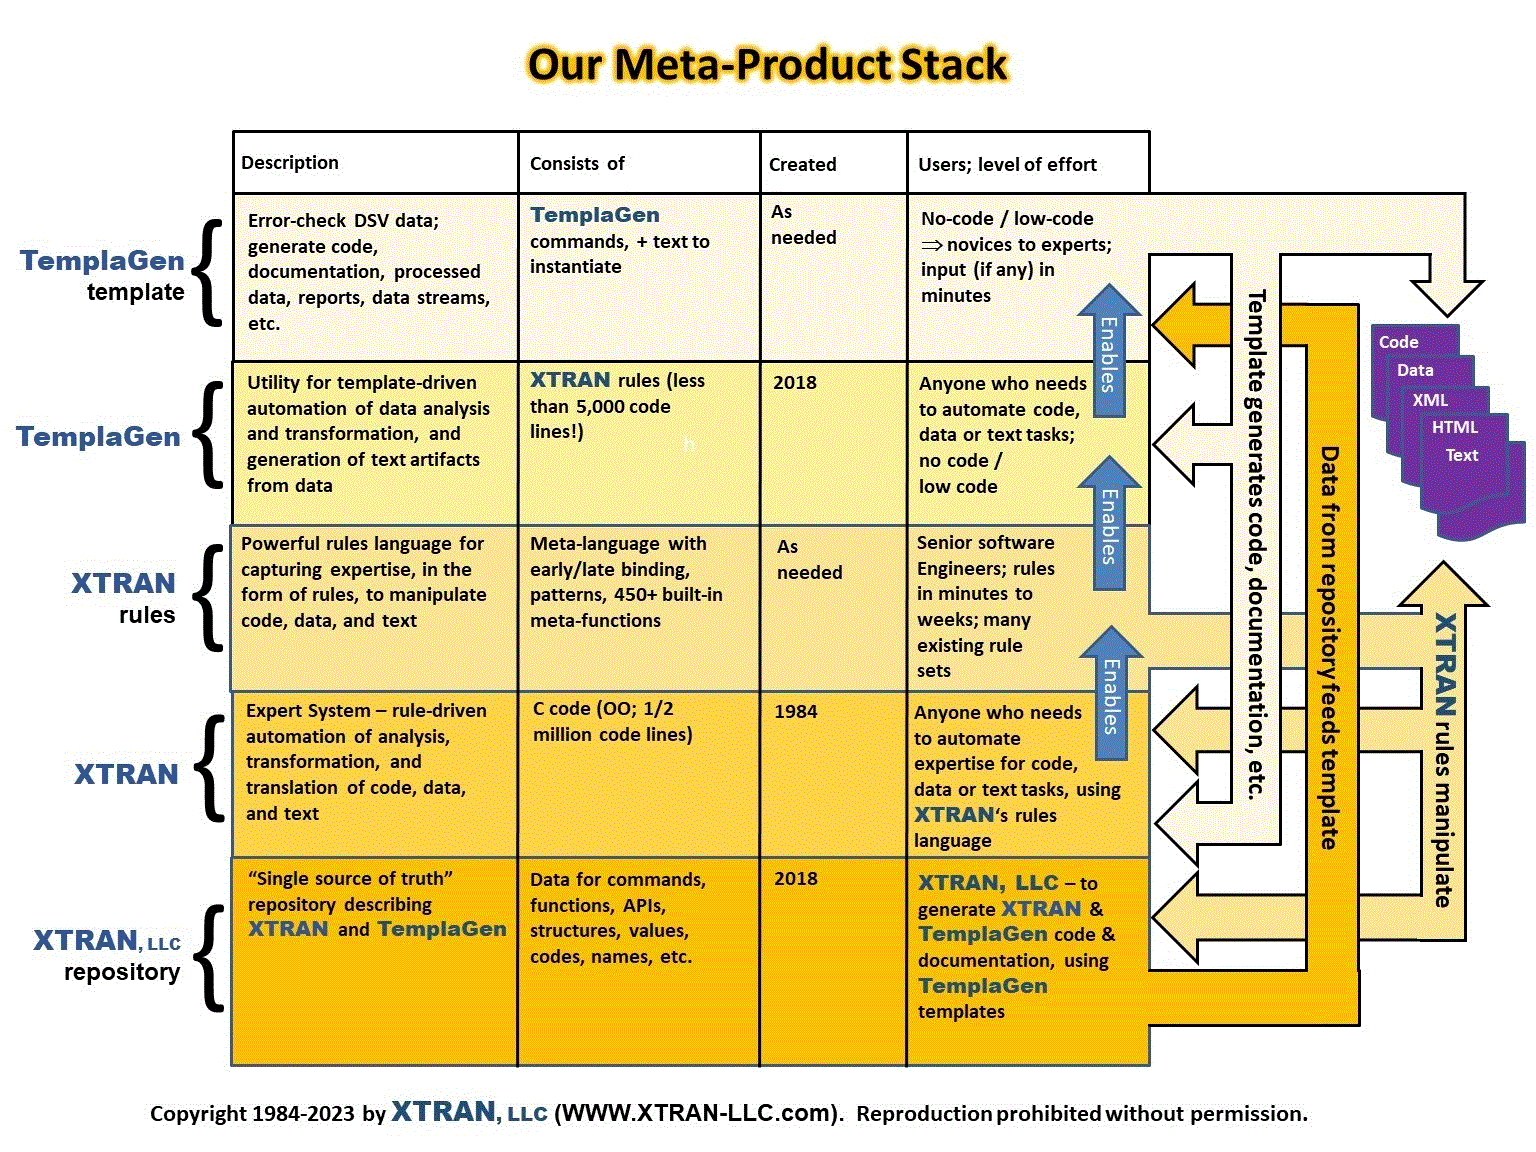 XTRAN, LLC's Meta-Product Stack